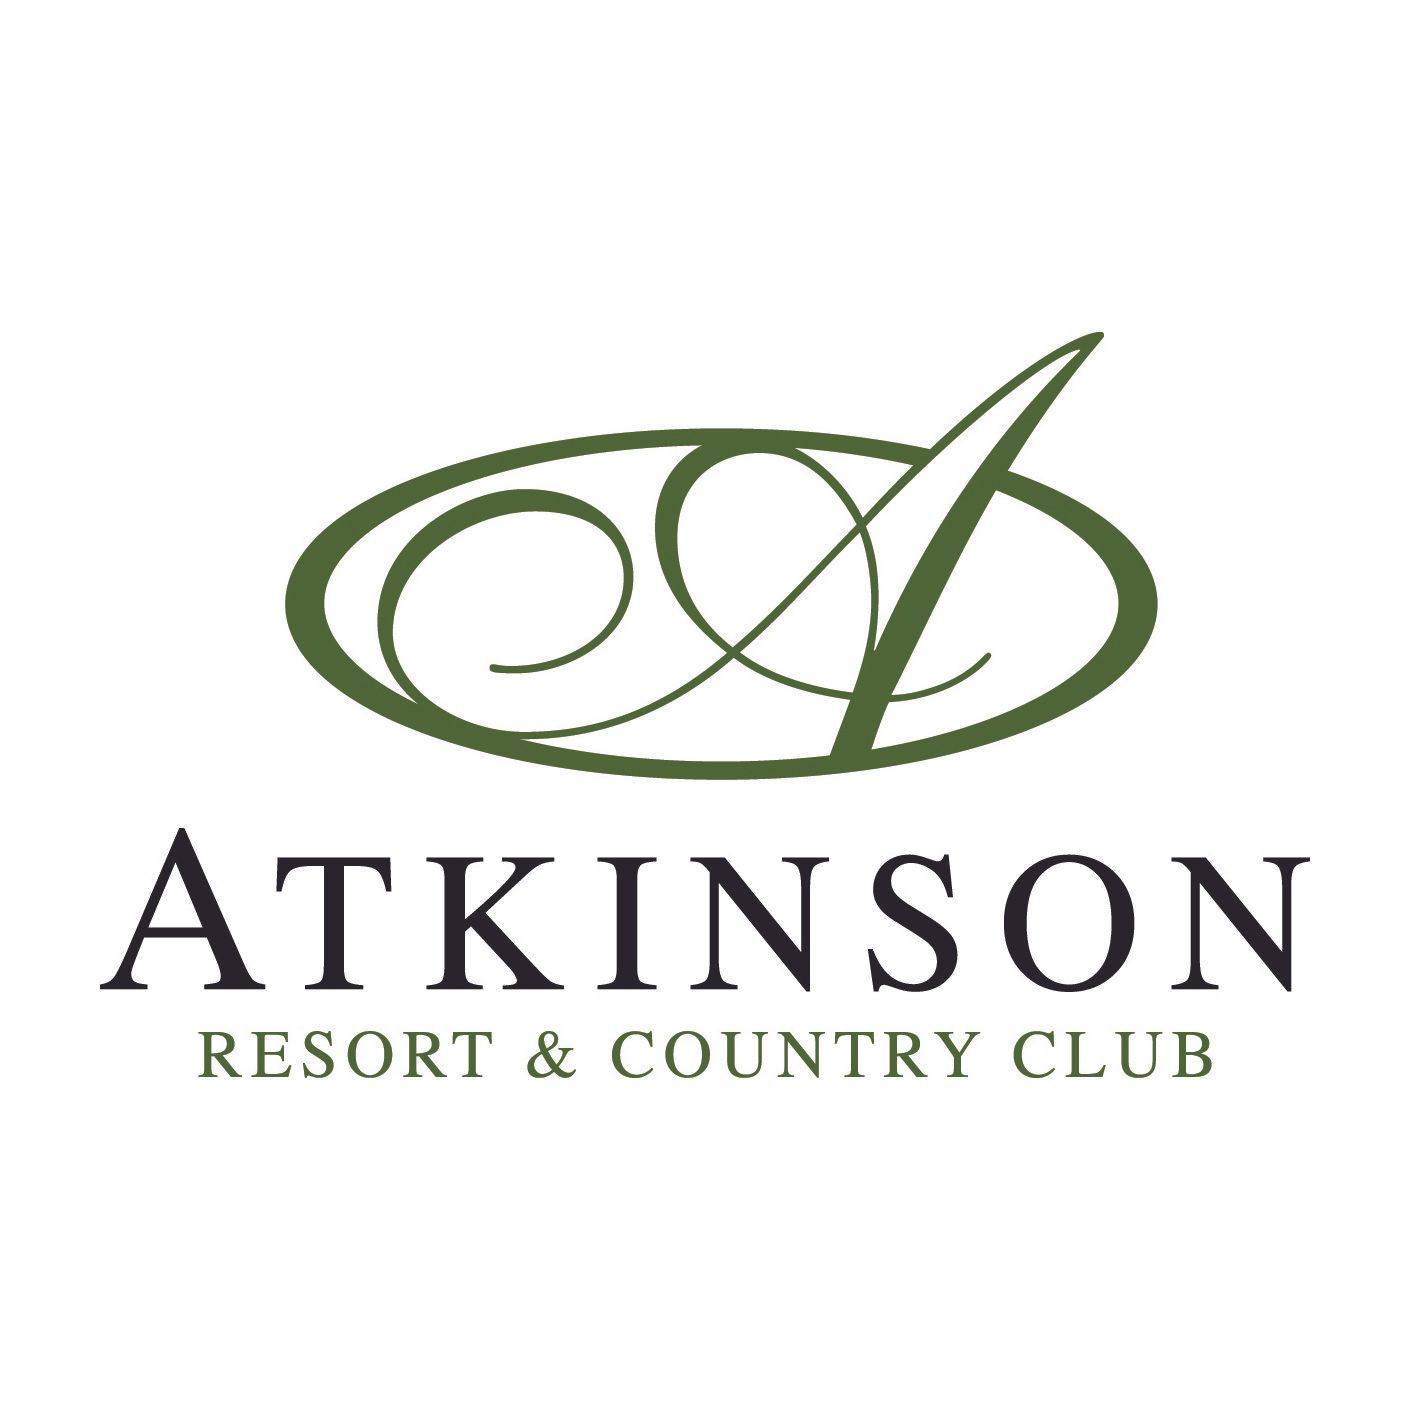 Atkinson Resort & Country Club - Golf, Weddings, Events, Dining, Lodging |  Atkinson, NH